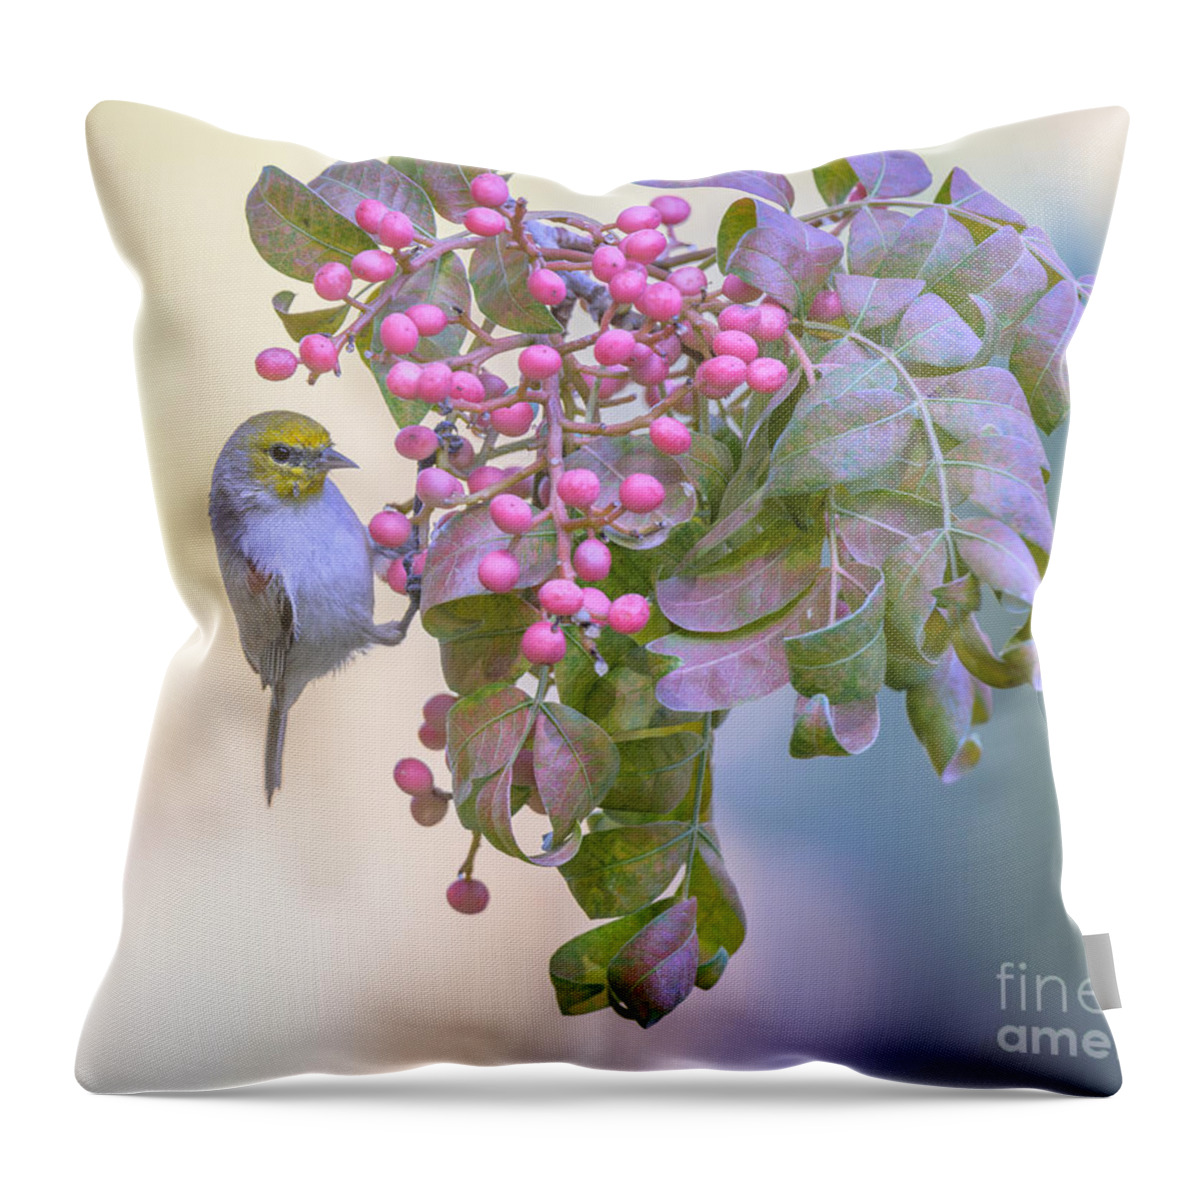 Verdin Throw Pillow featuring the photograph Verdin in Berries by Lisa Manifold